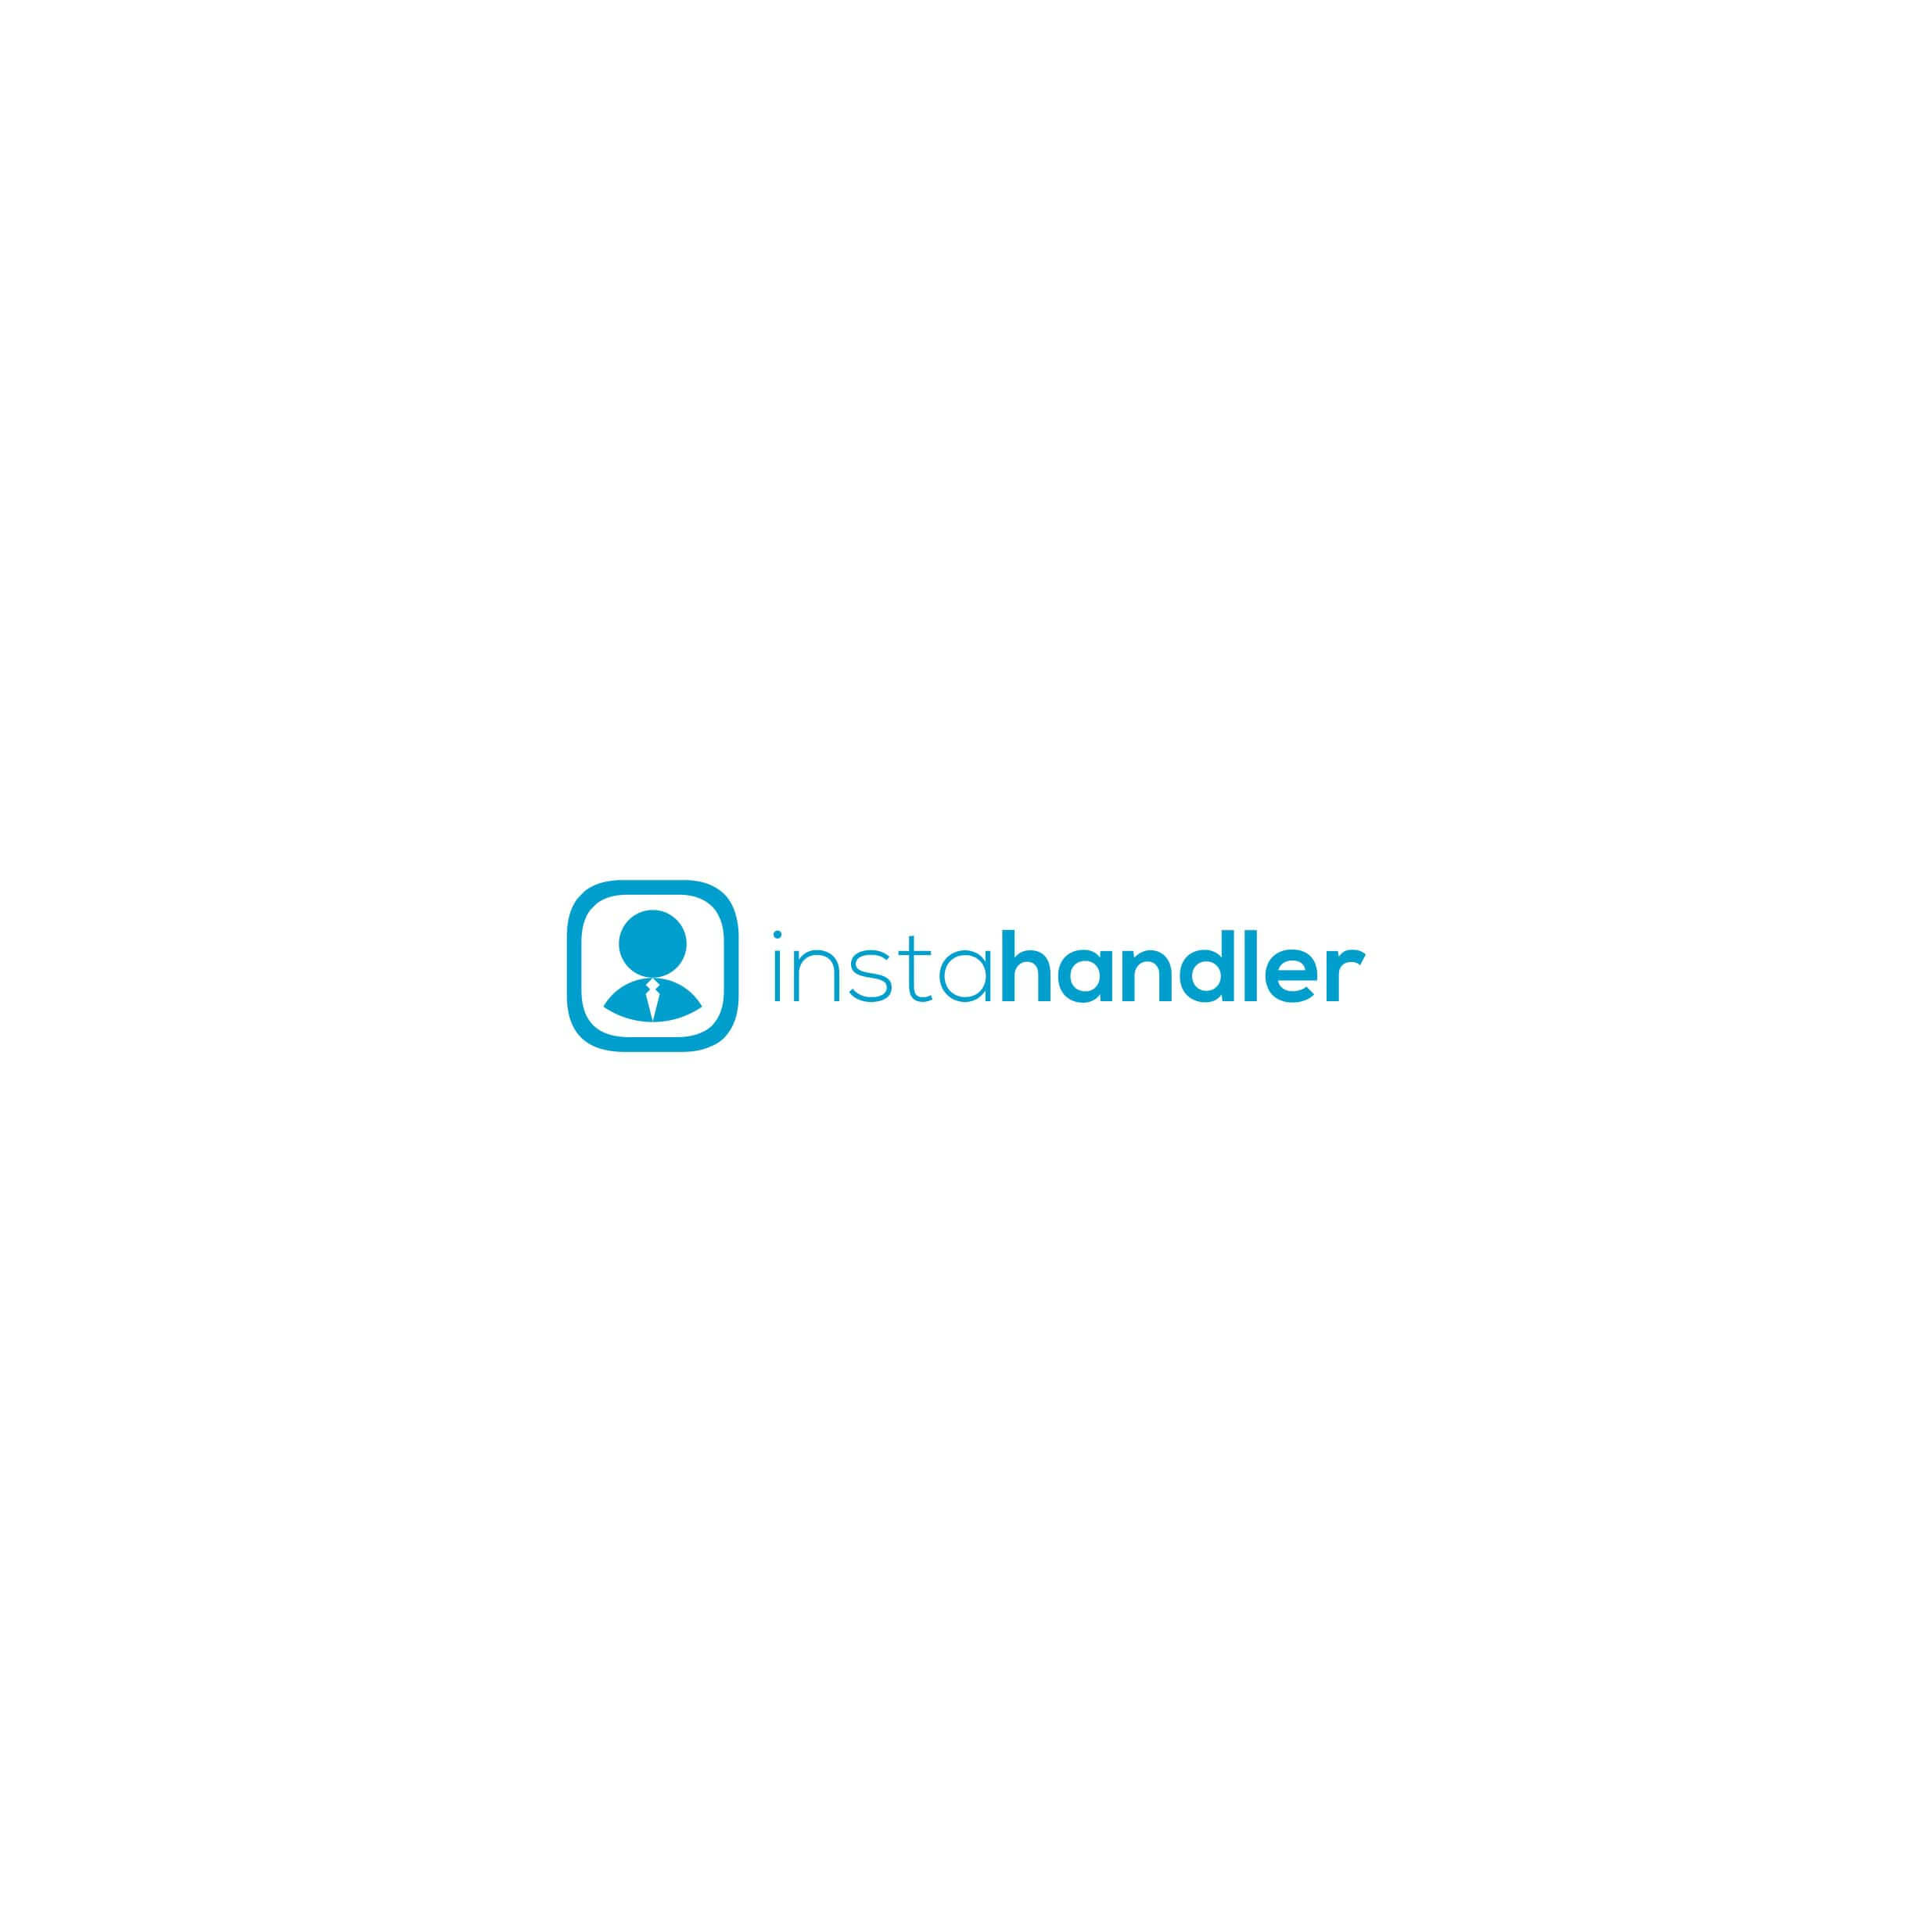 InstaHandler Logo Design - Web Application For Instagram